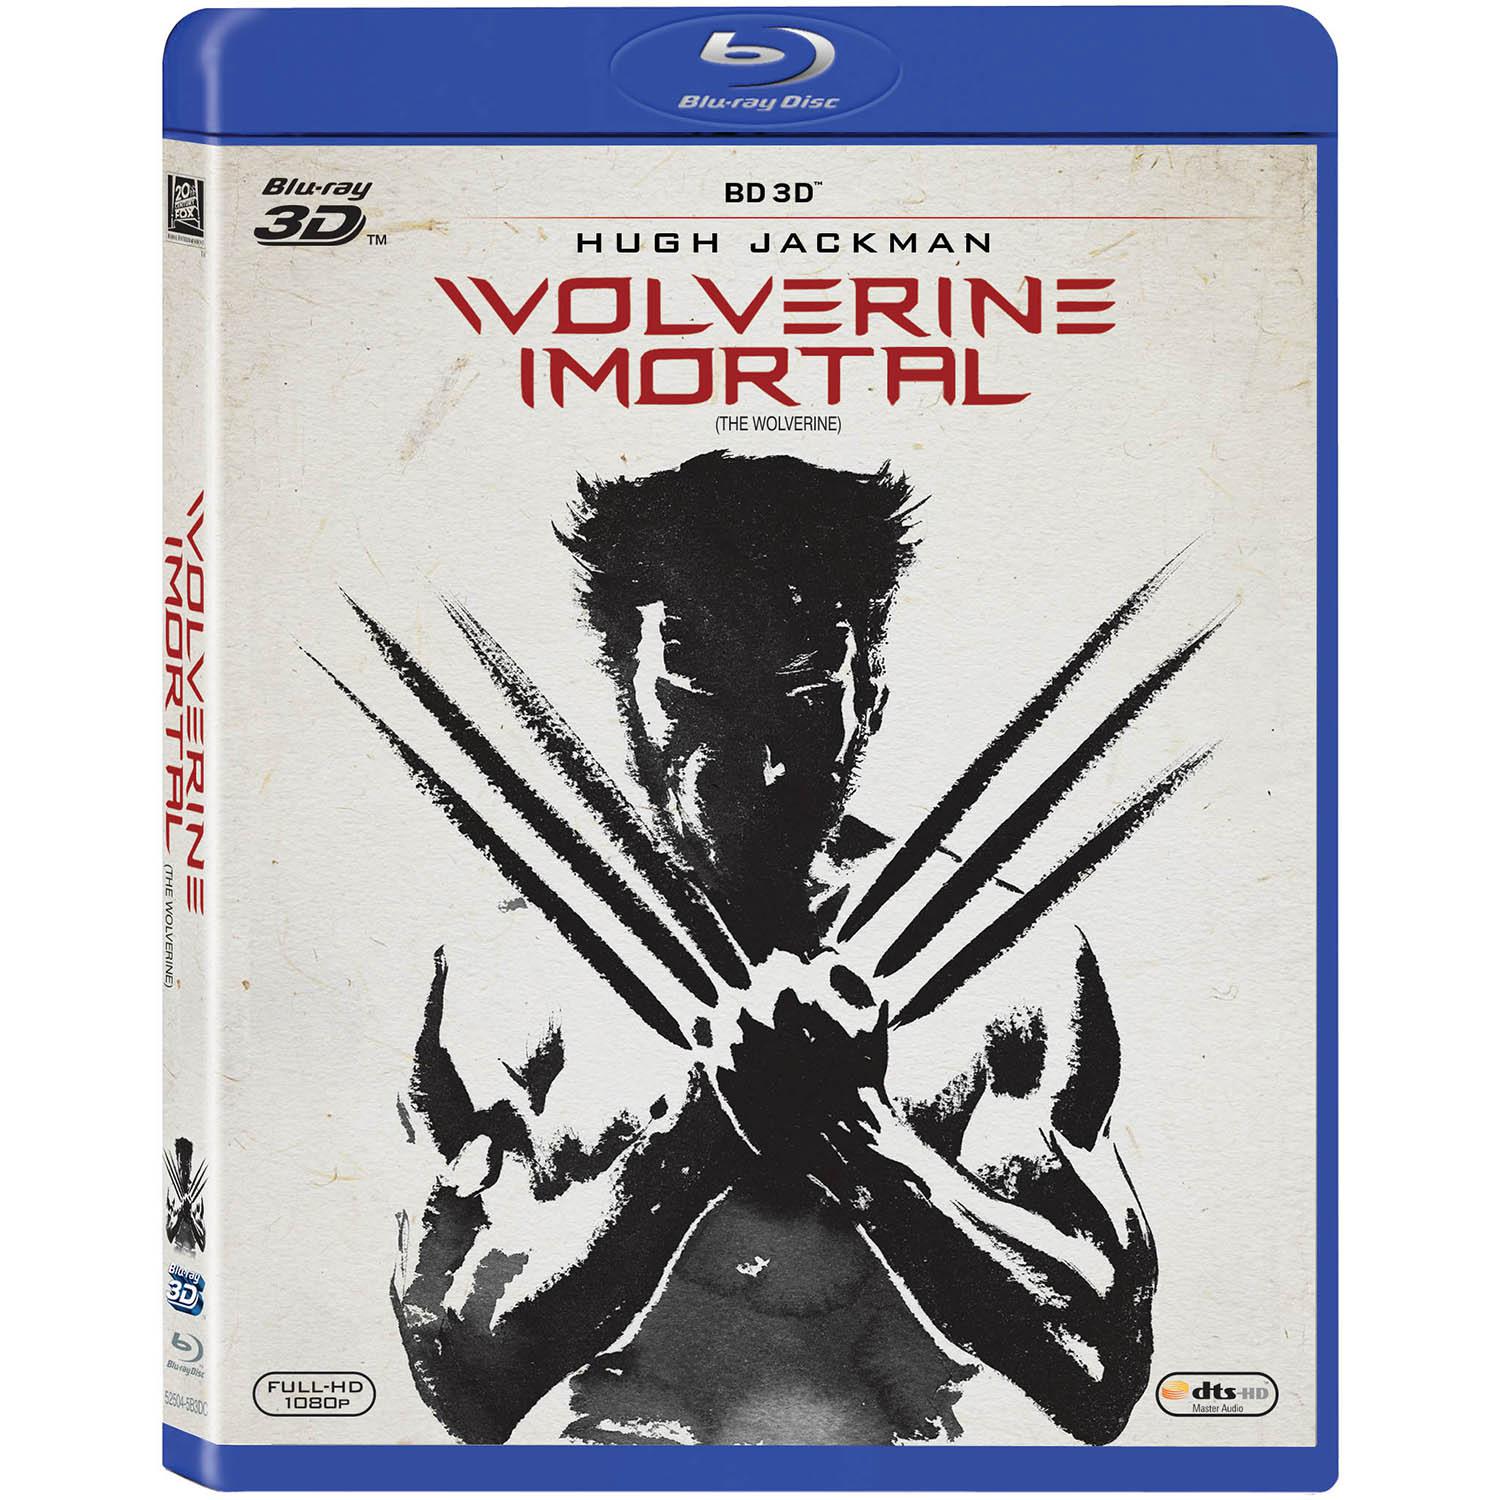 Blu-ray 3D Wolverine Imortal (Blu-ray 3D + Blu-ray) é bom? Vale a pena?